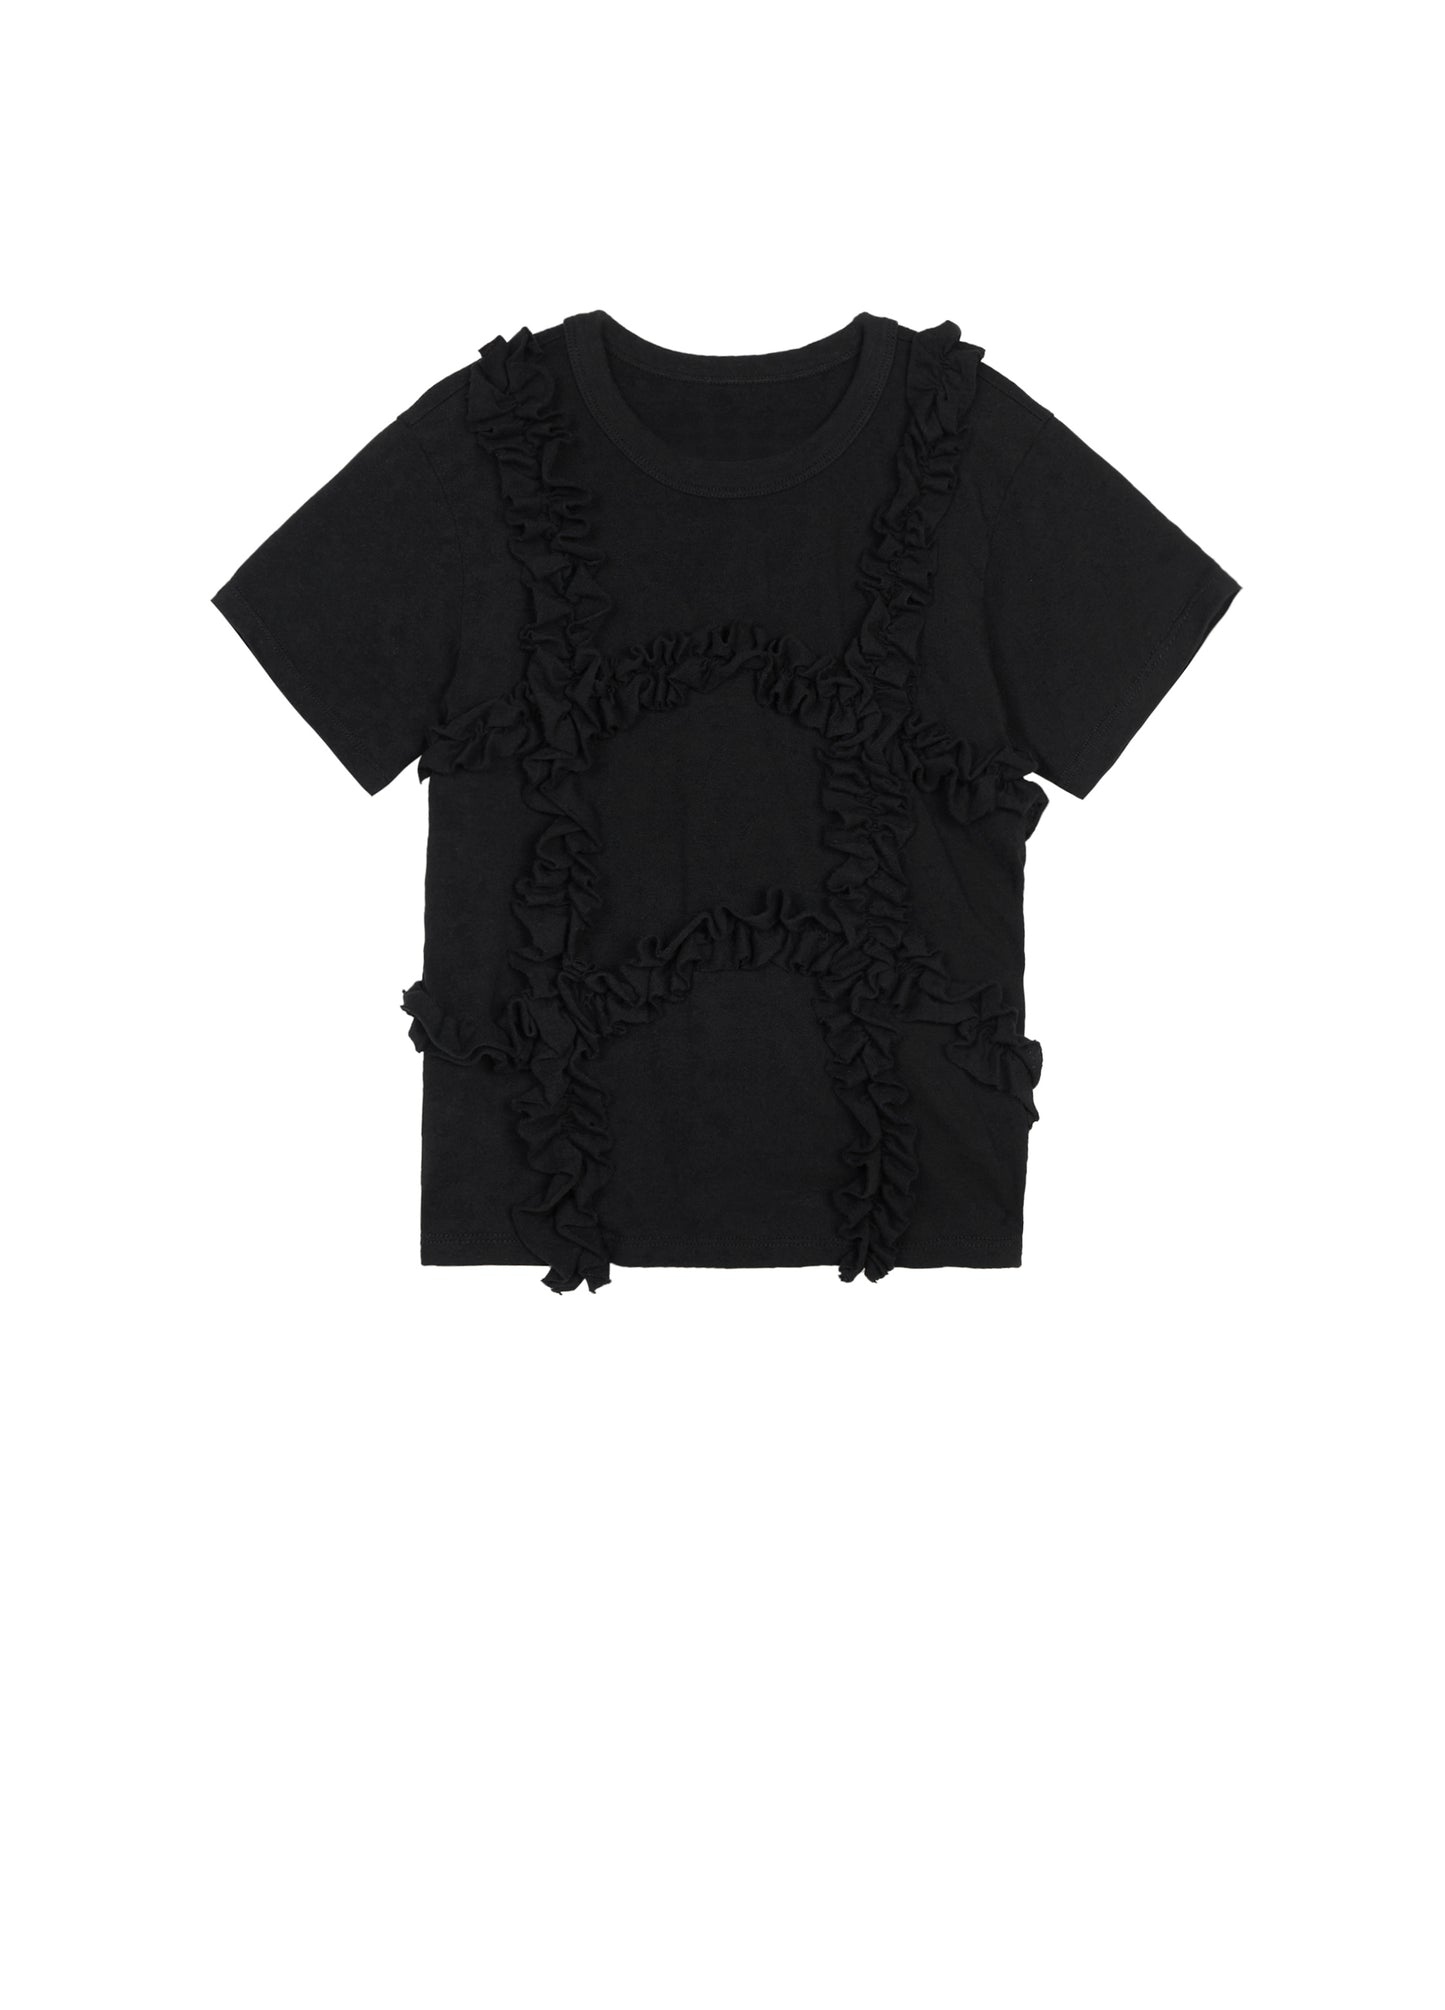 JNBY T-Shirt w/Ruffles _Black 1M1111000-001